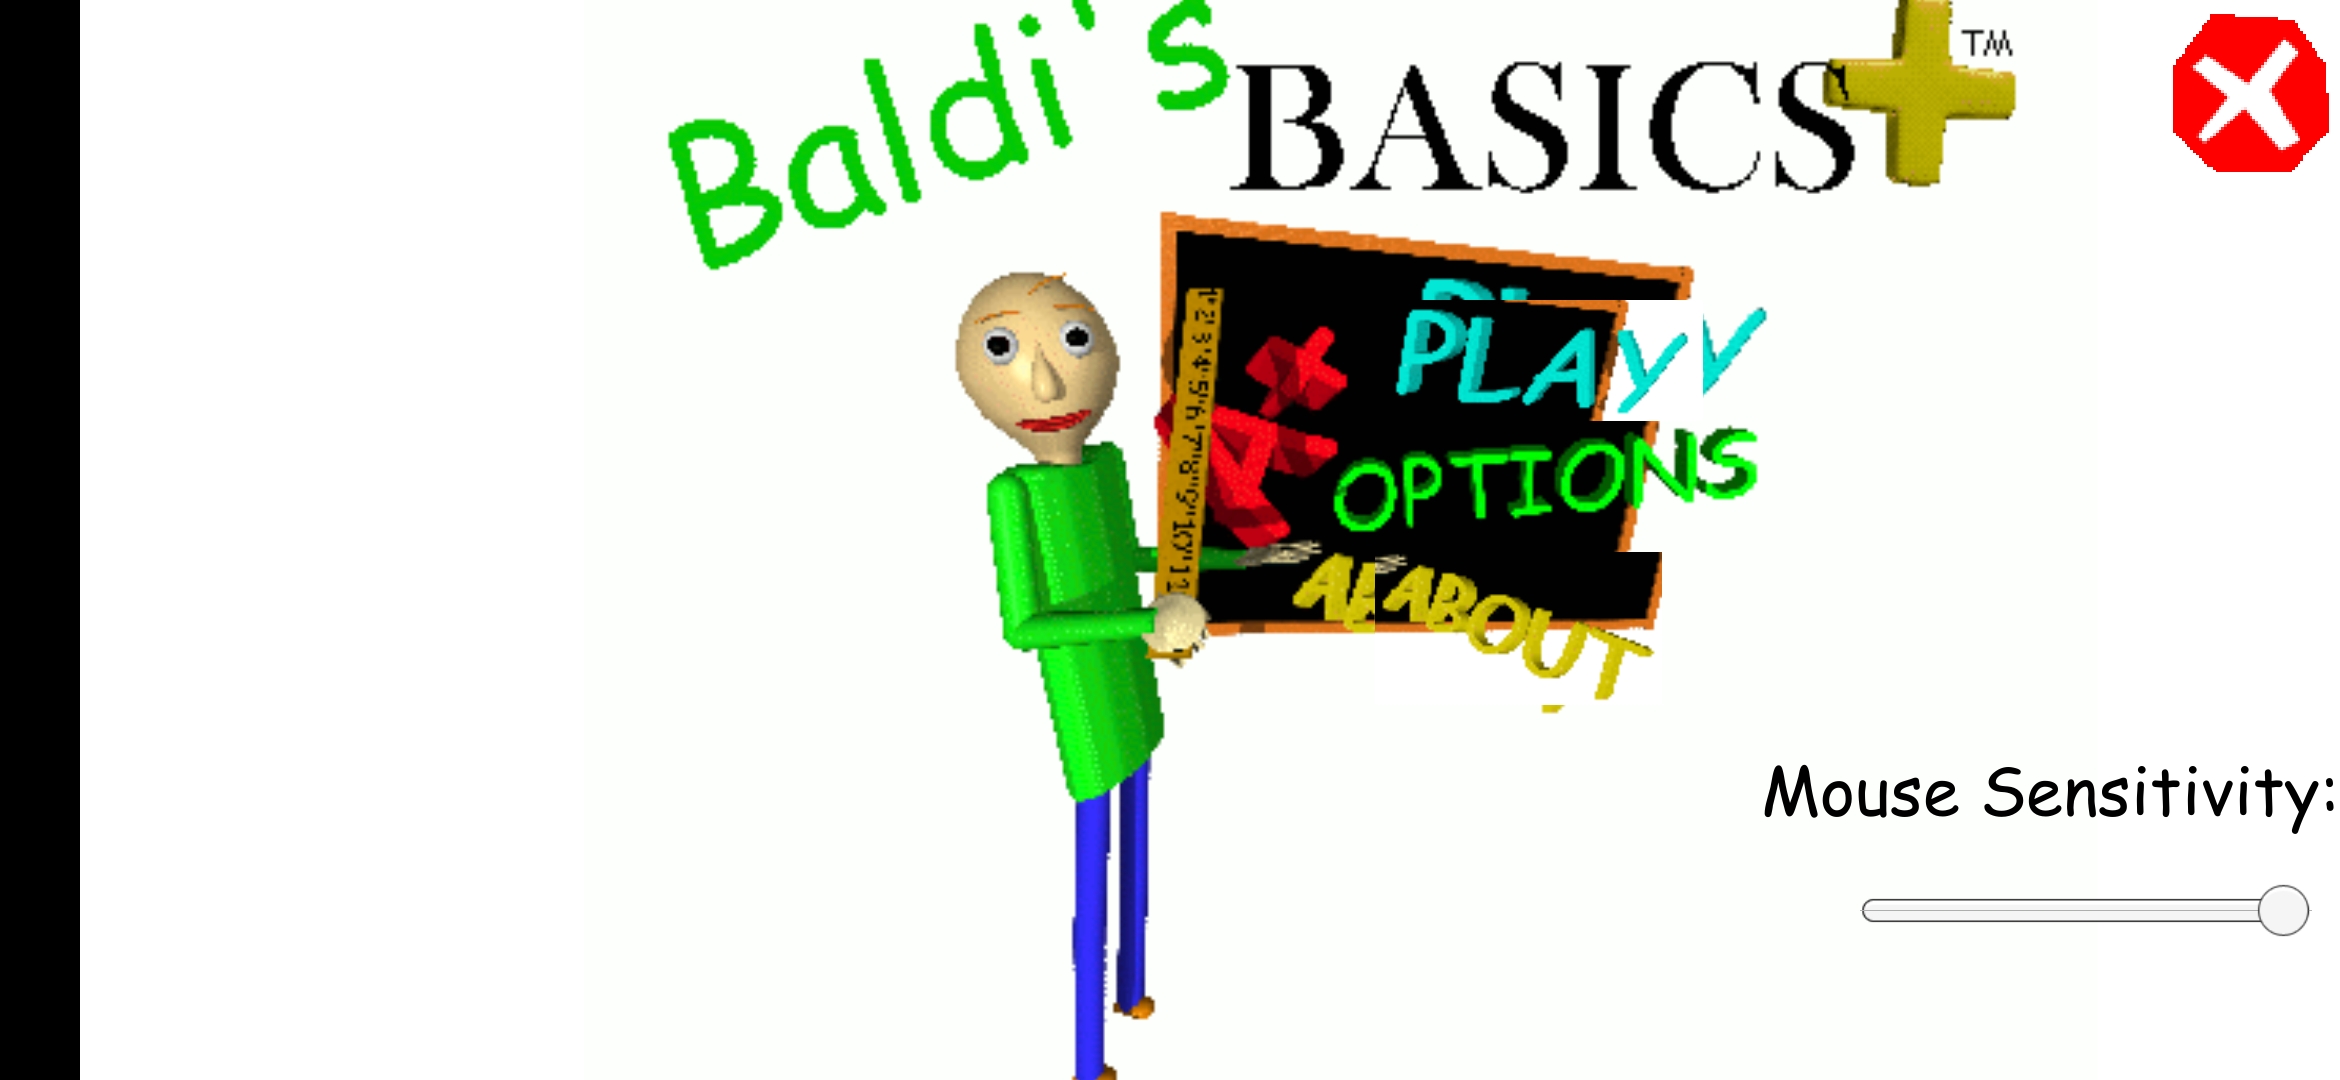 Baldi Basics Plus On Android by LMsonicboy8269